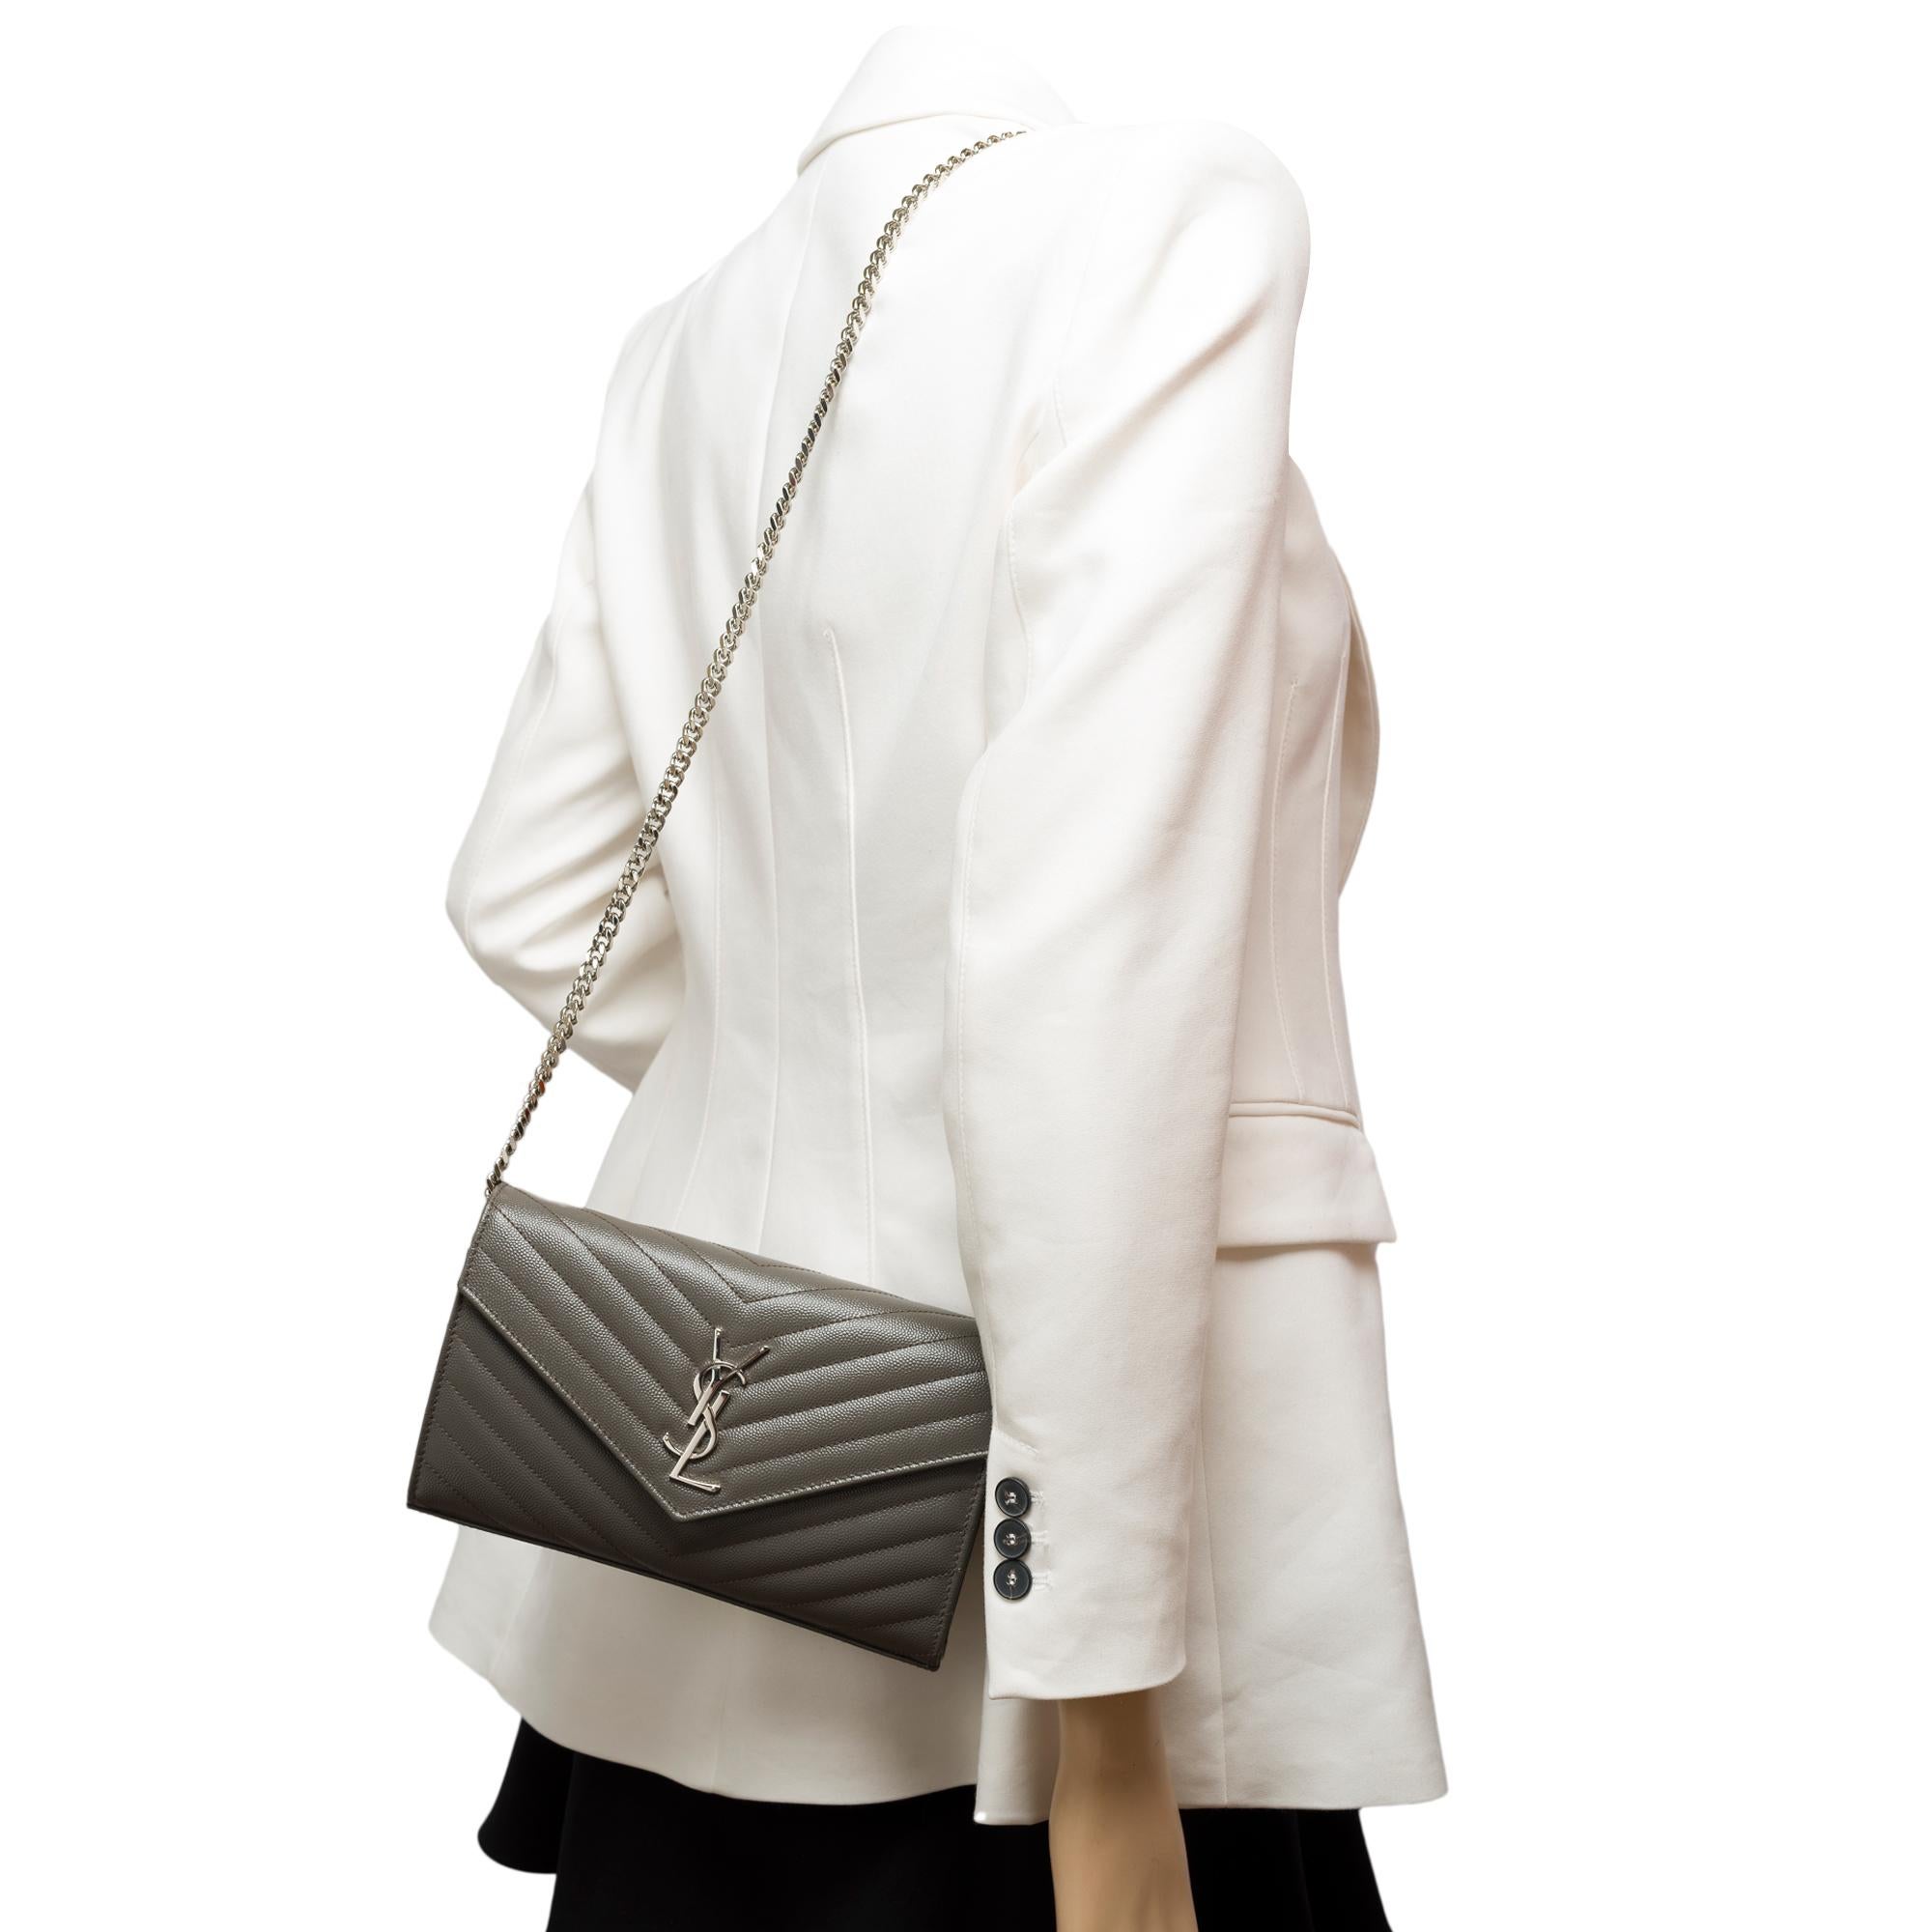 New YSL Pochette Cassandre classic shoulder bag in Grey leather, SHW For Sale 8